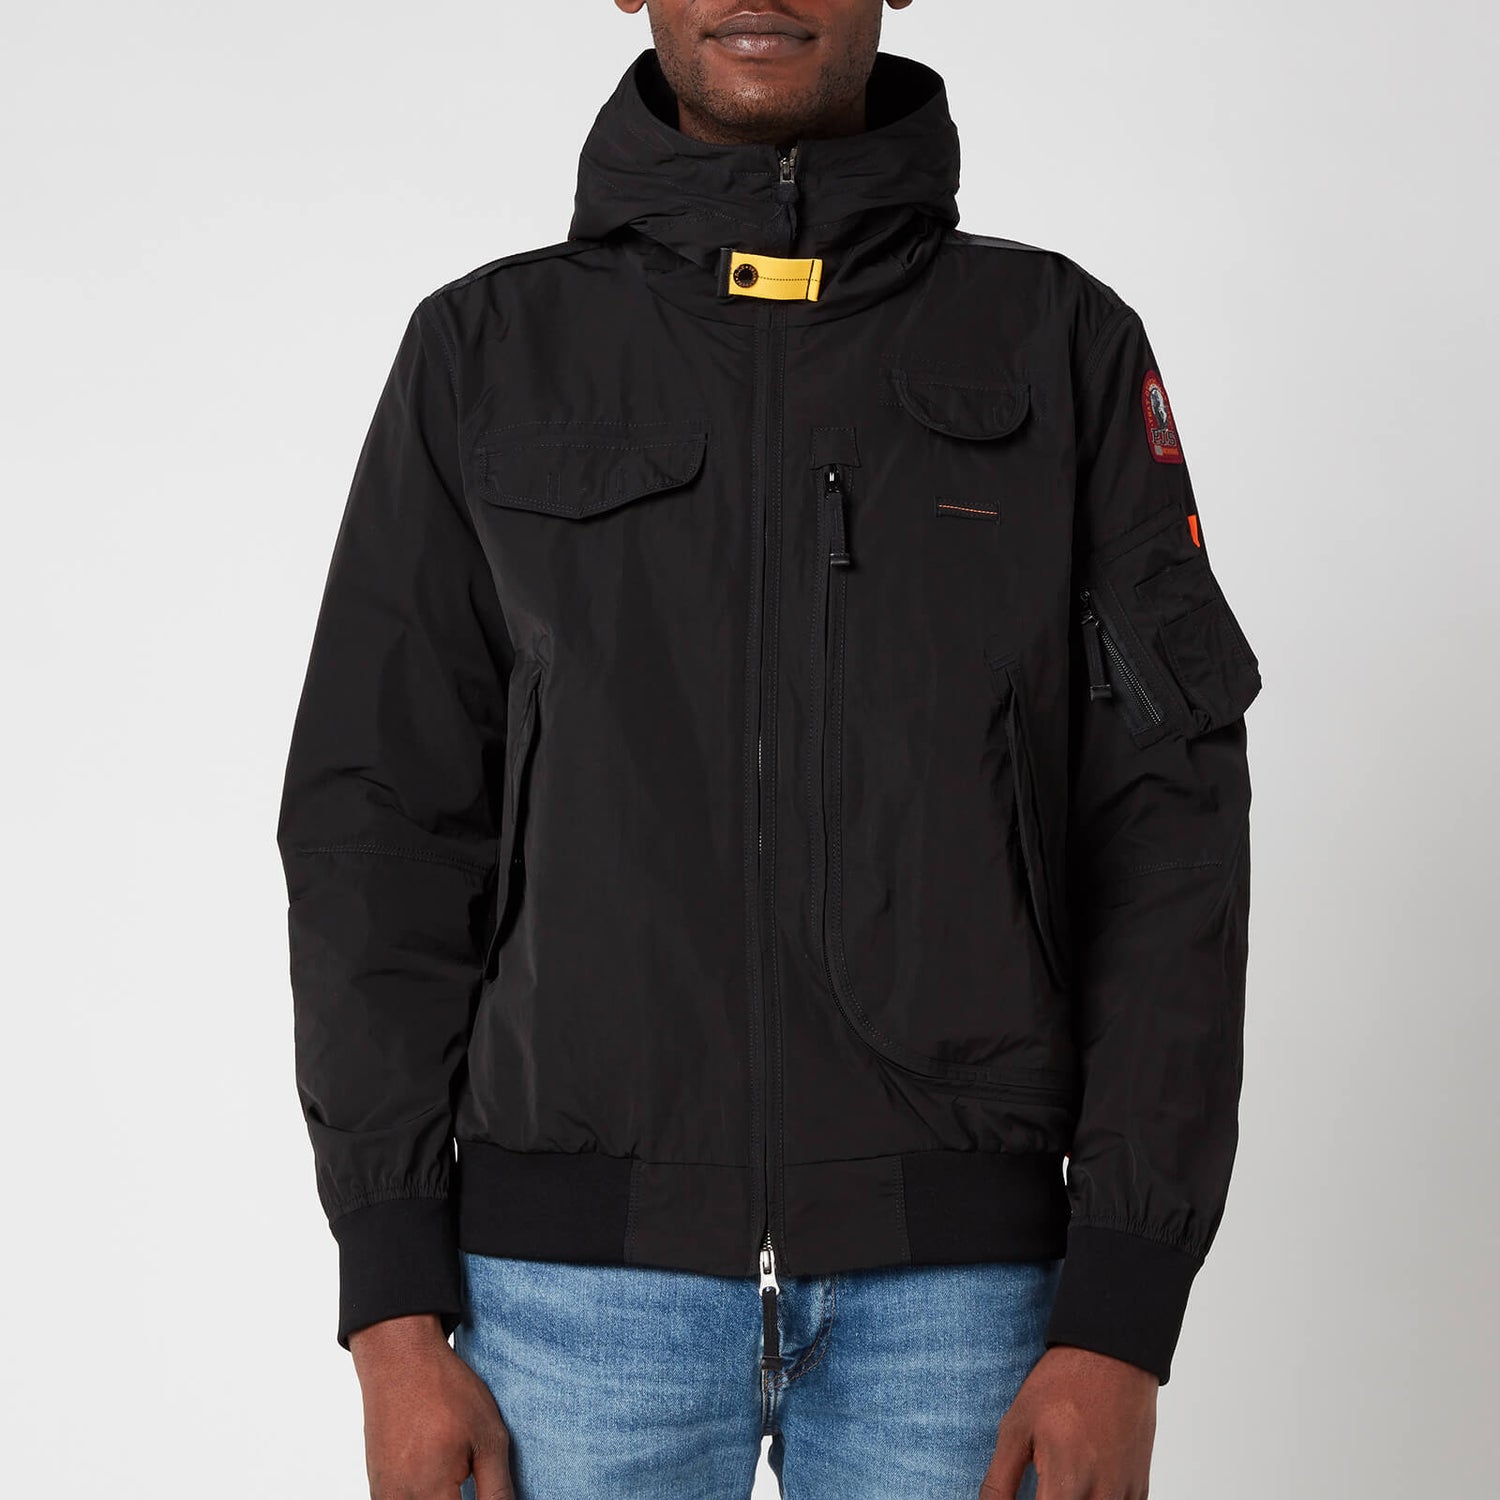 Parajumpers Men's Gobi Spring Jacket - Black - Free UK Delivery Available